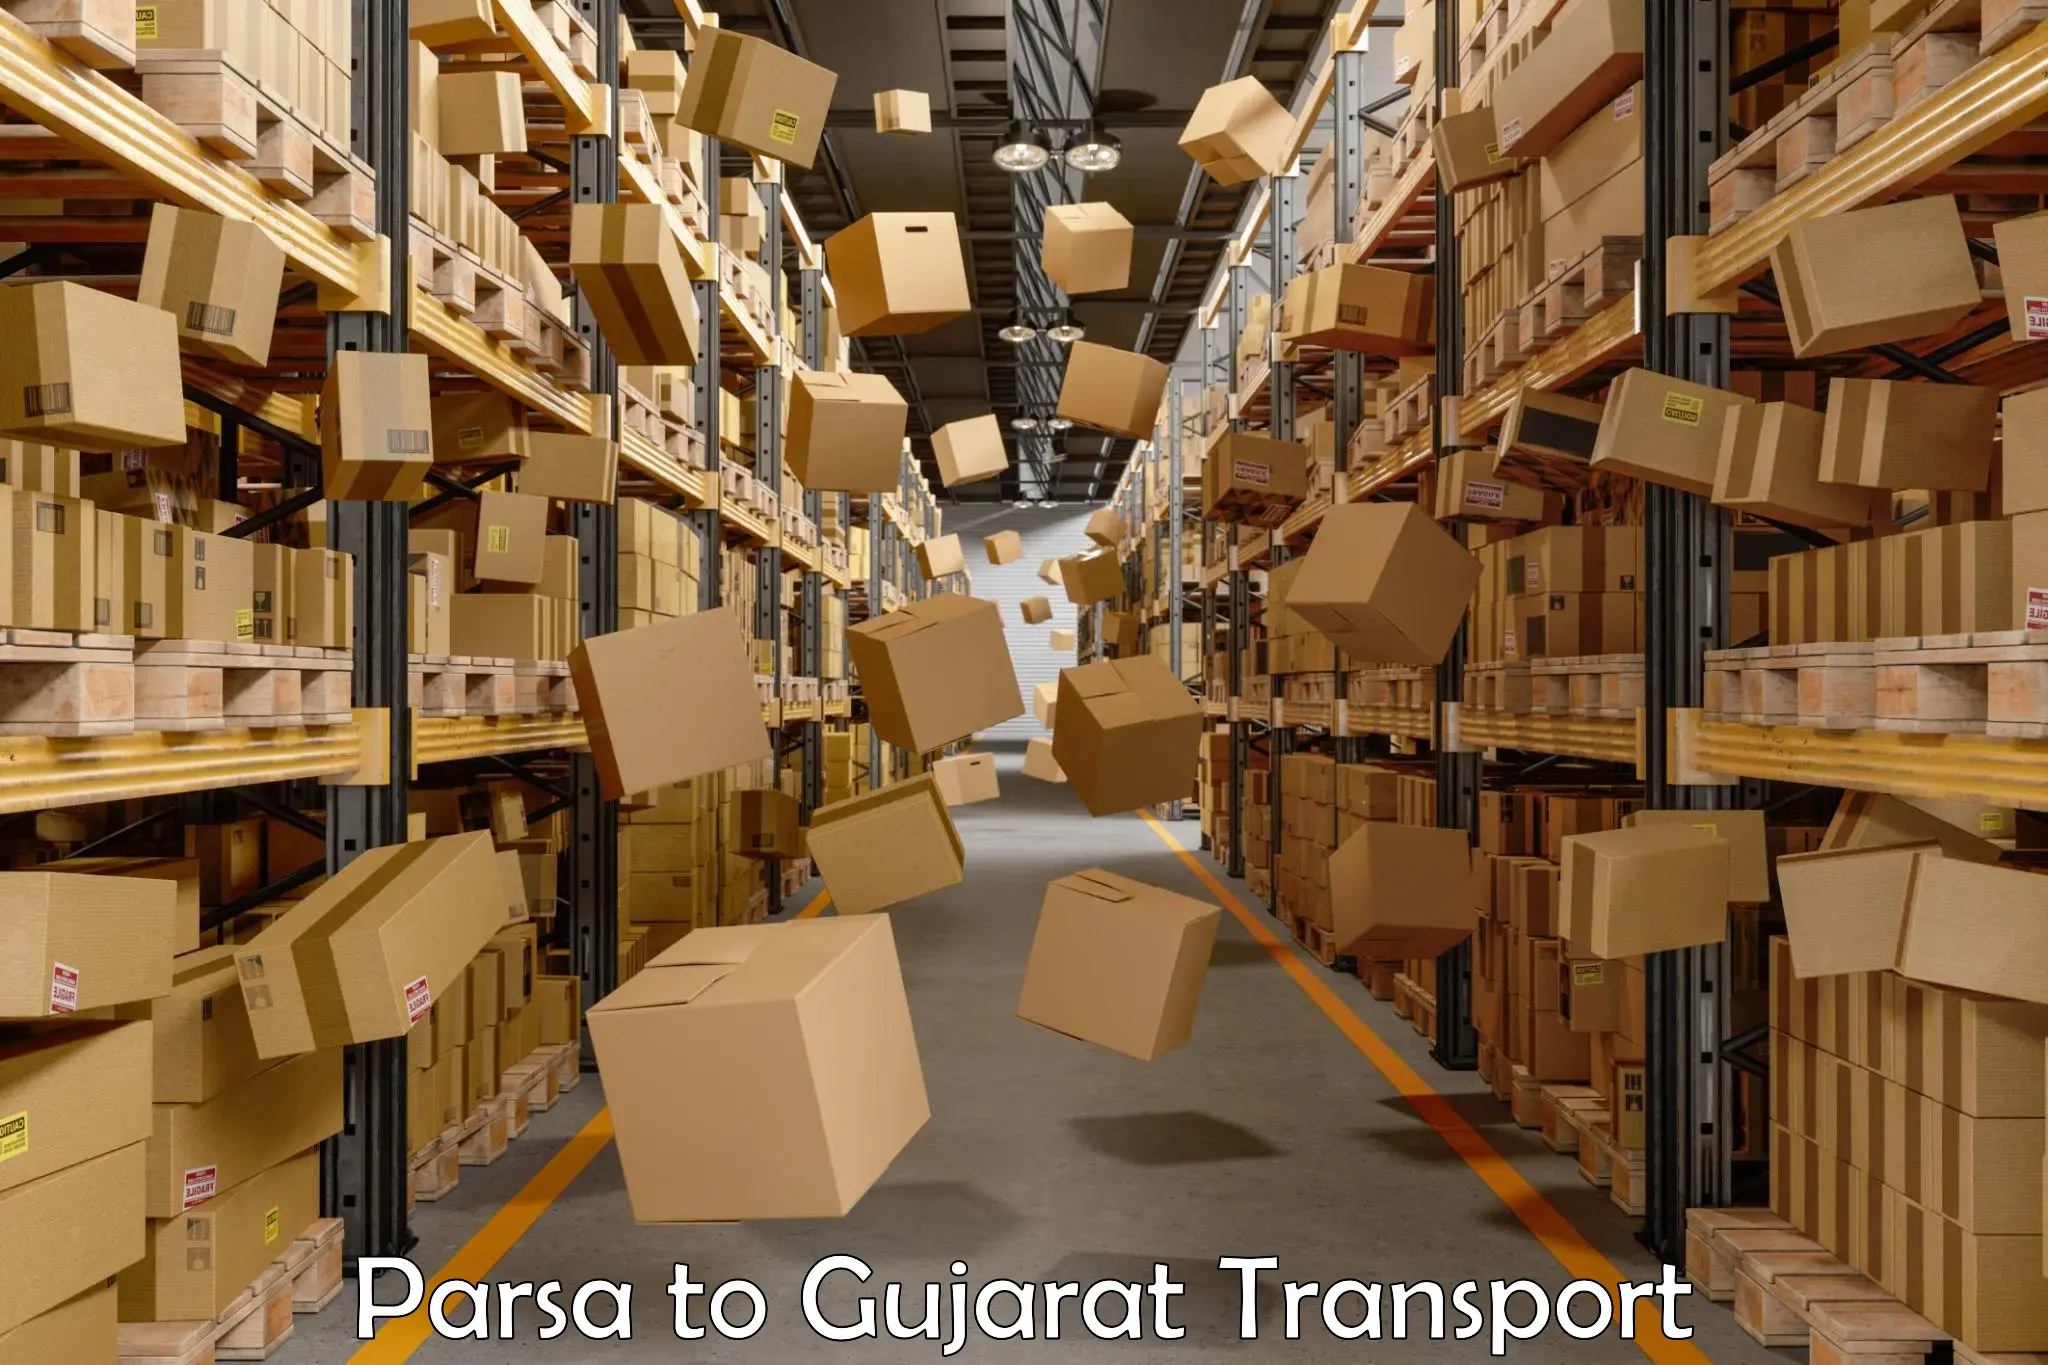 Daily parcel service transport Parsa to GIDC